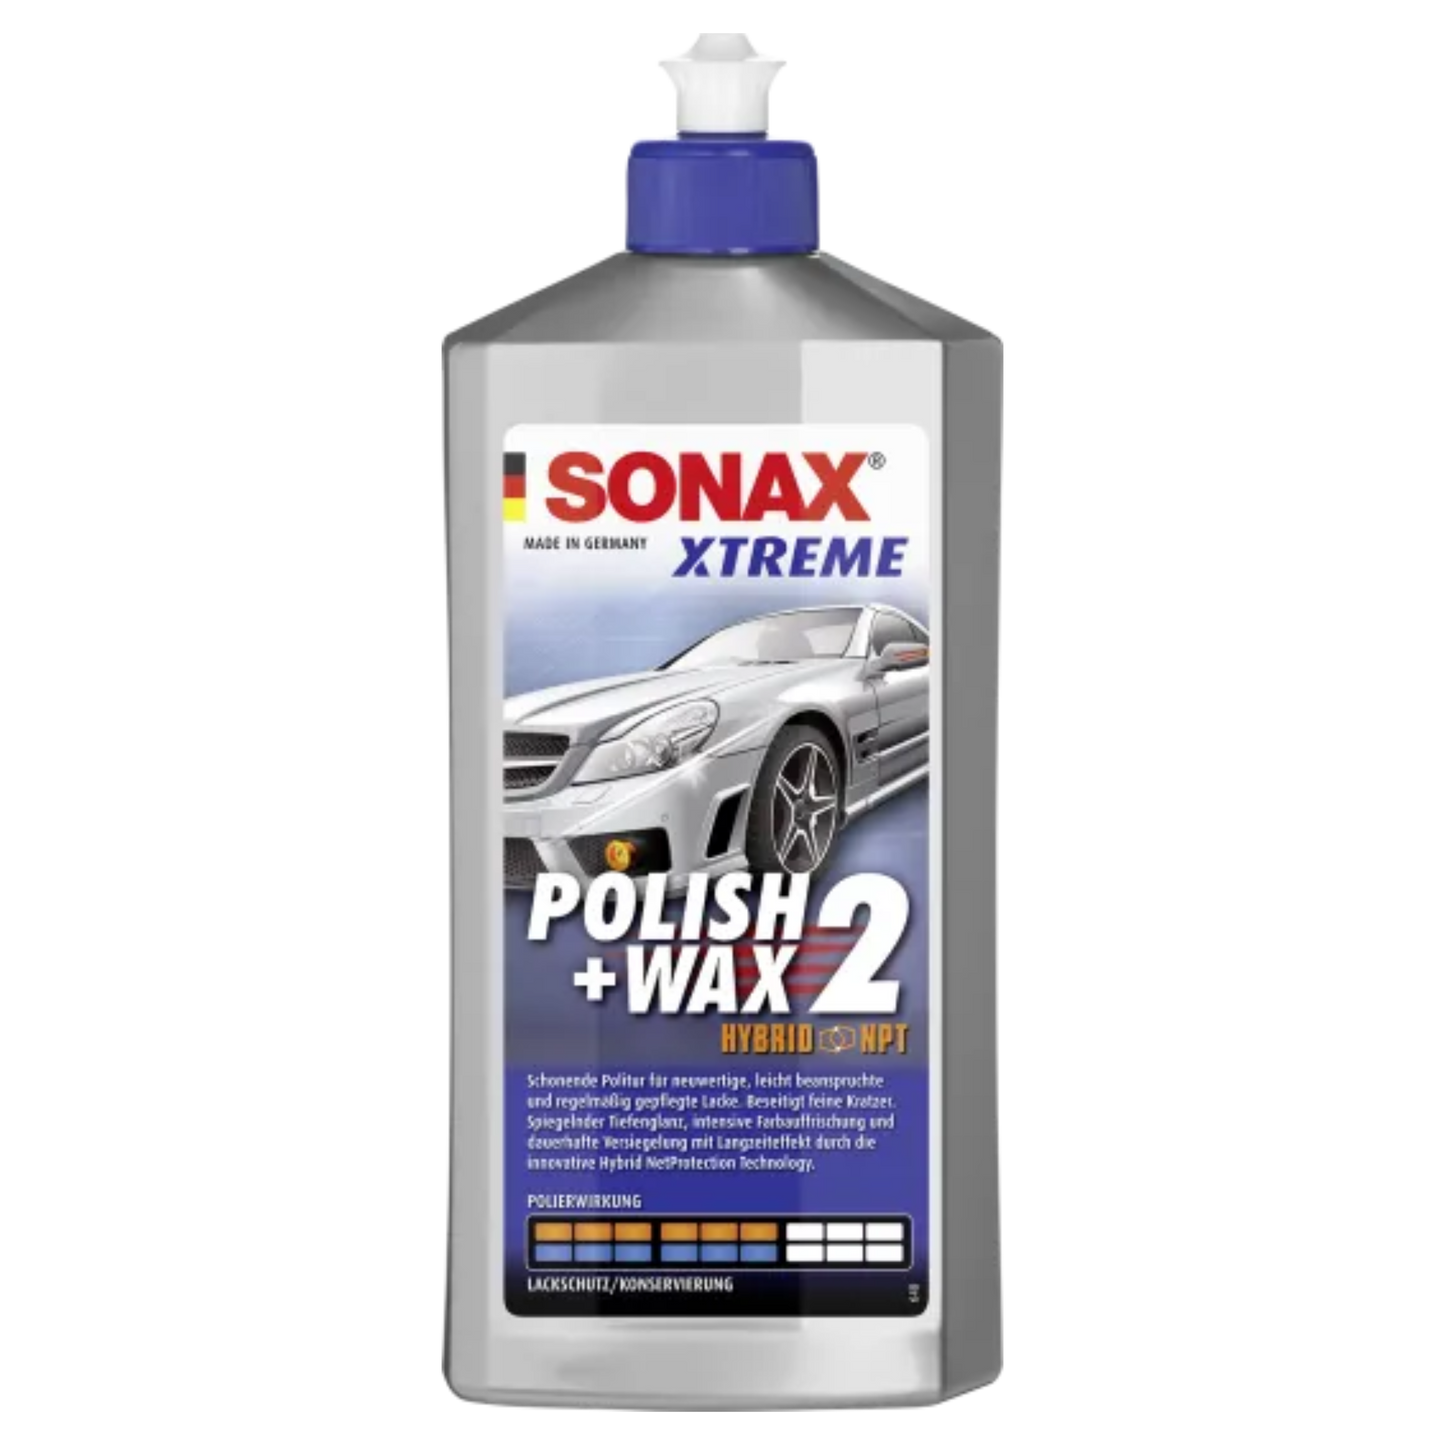 SONAX XTREME Polish + Wax 2 Hybrid NPT, 500ml